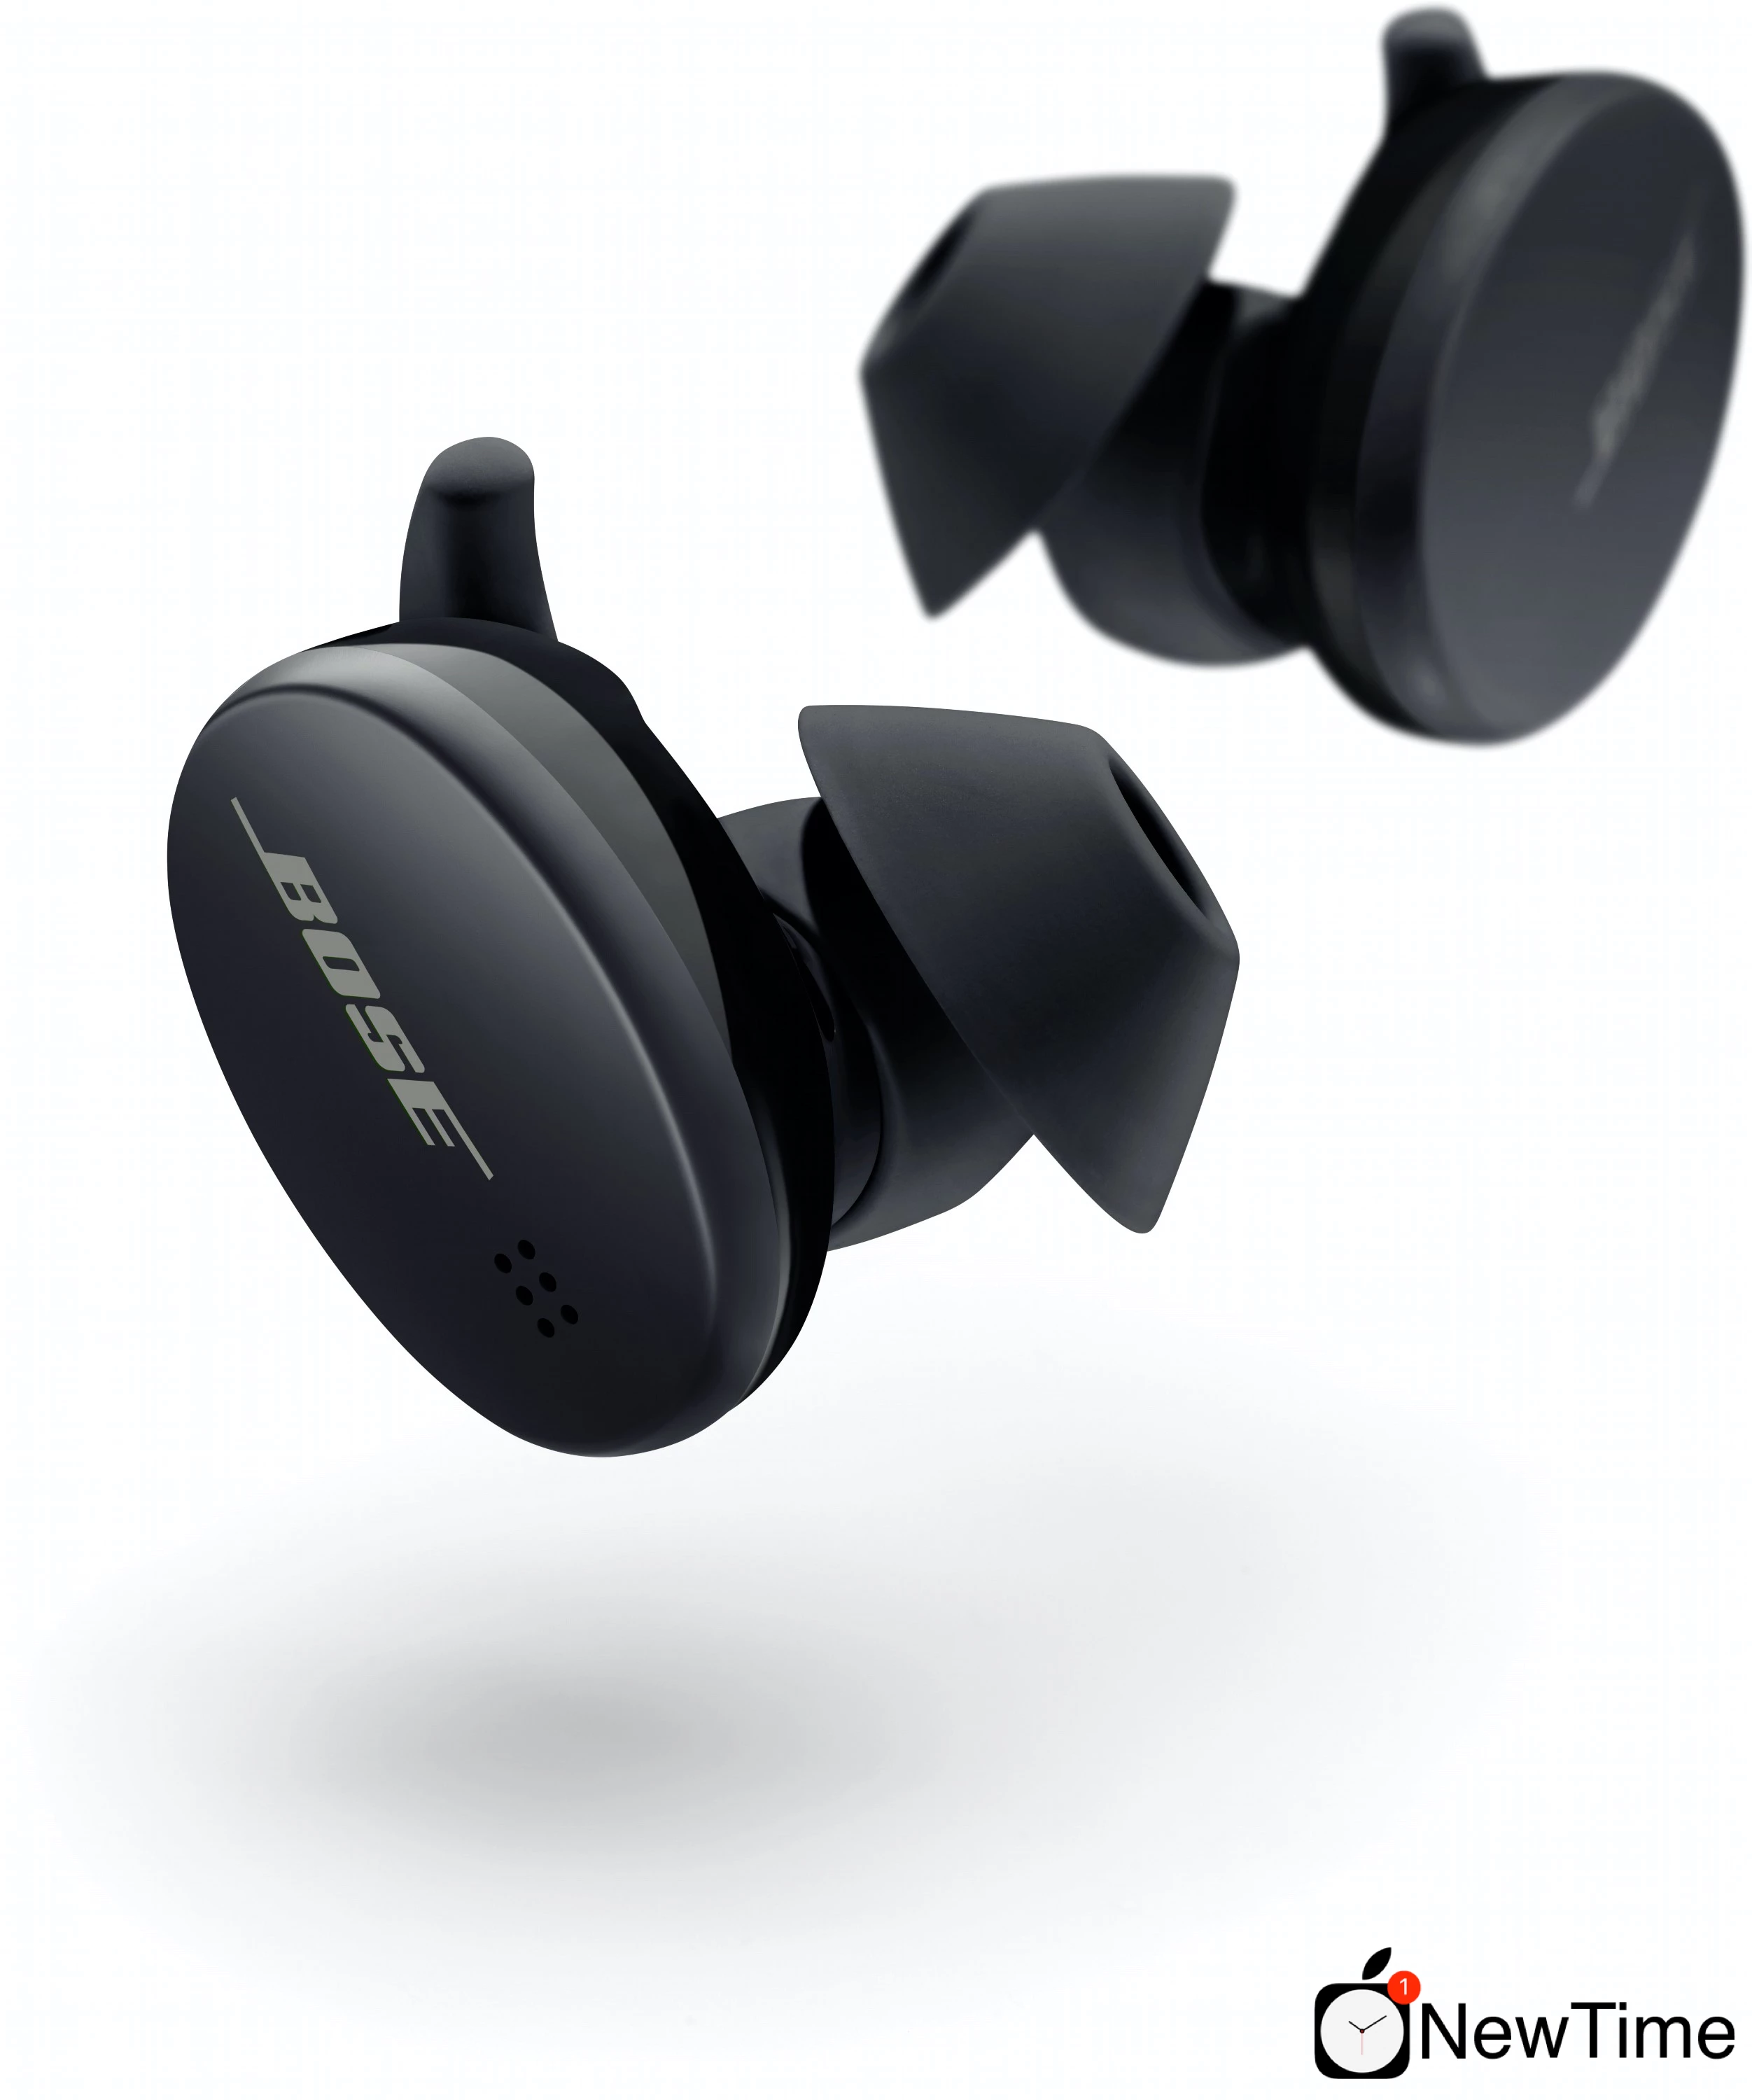 Bose sports earbuds. Беспроводные наушники Bose Sport Earbuds. Bose Sport Earbuds черный. Bose наушники беспроводные Sport one. Спортивные наушники Bluetooth Bose Sport Earbuds Black.